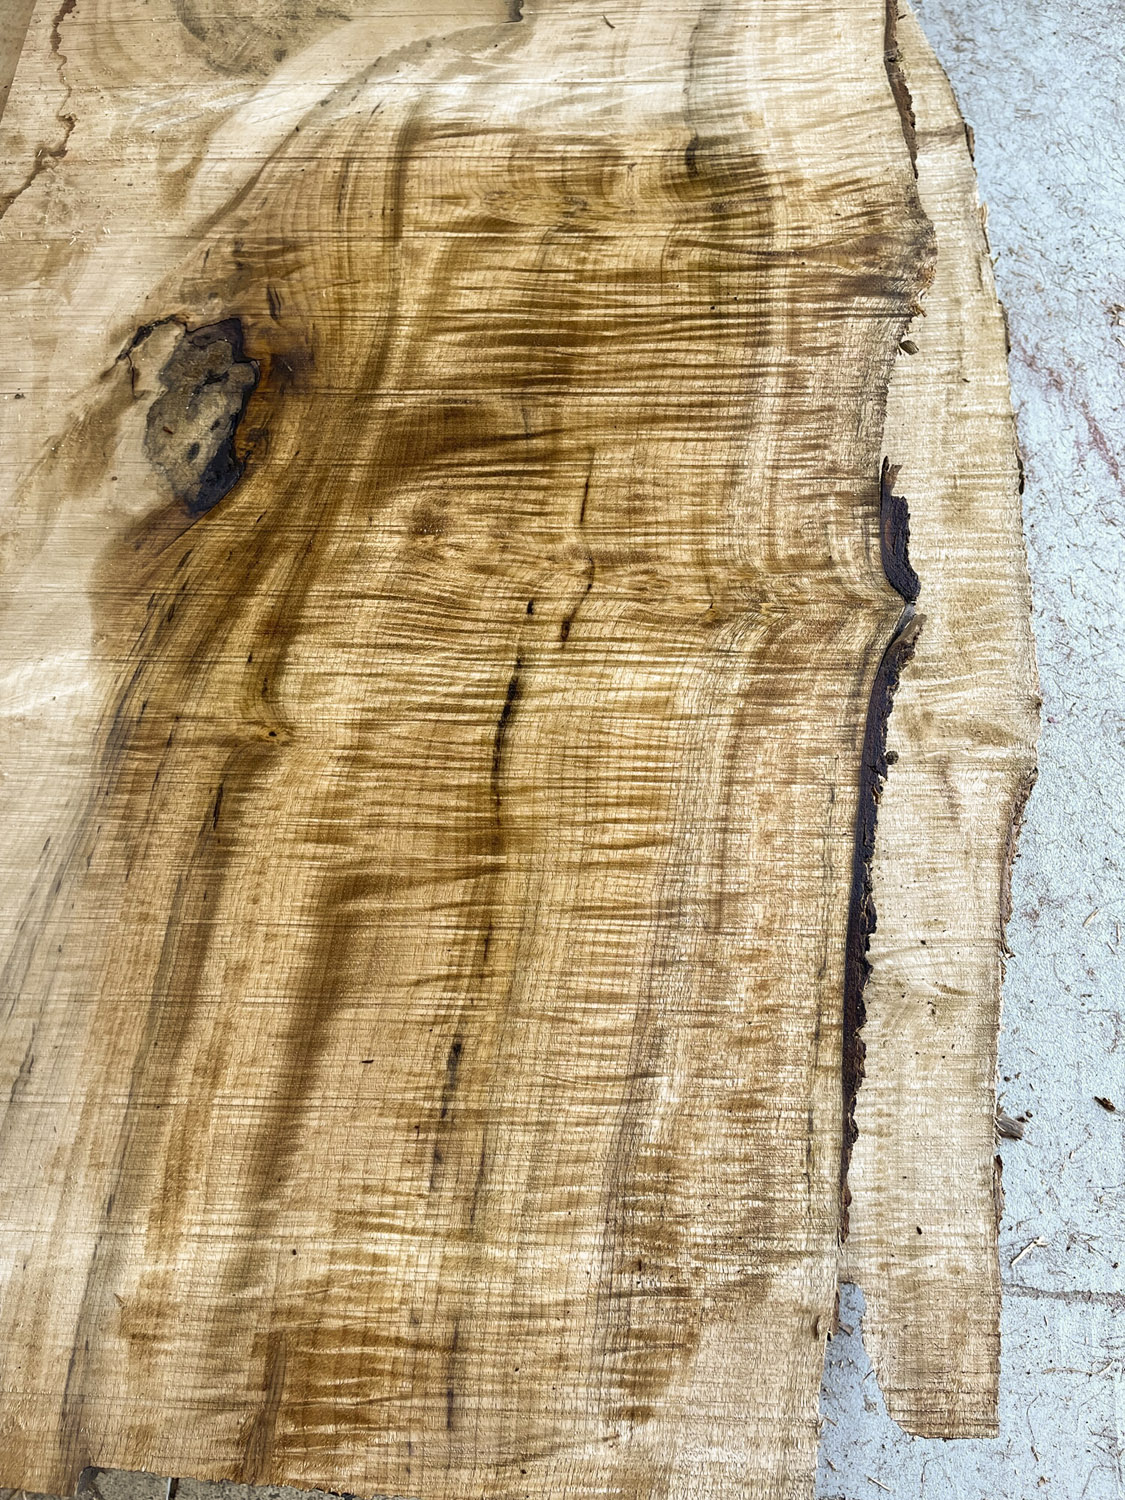 5/4 Heavy Figure American Myrtle Wood